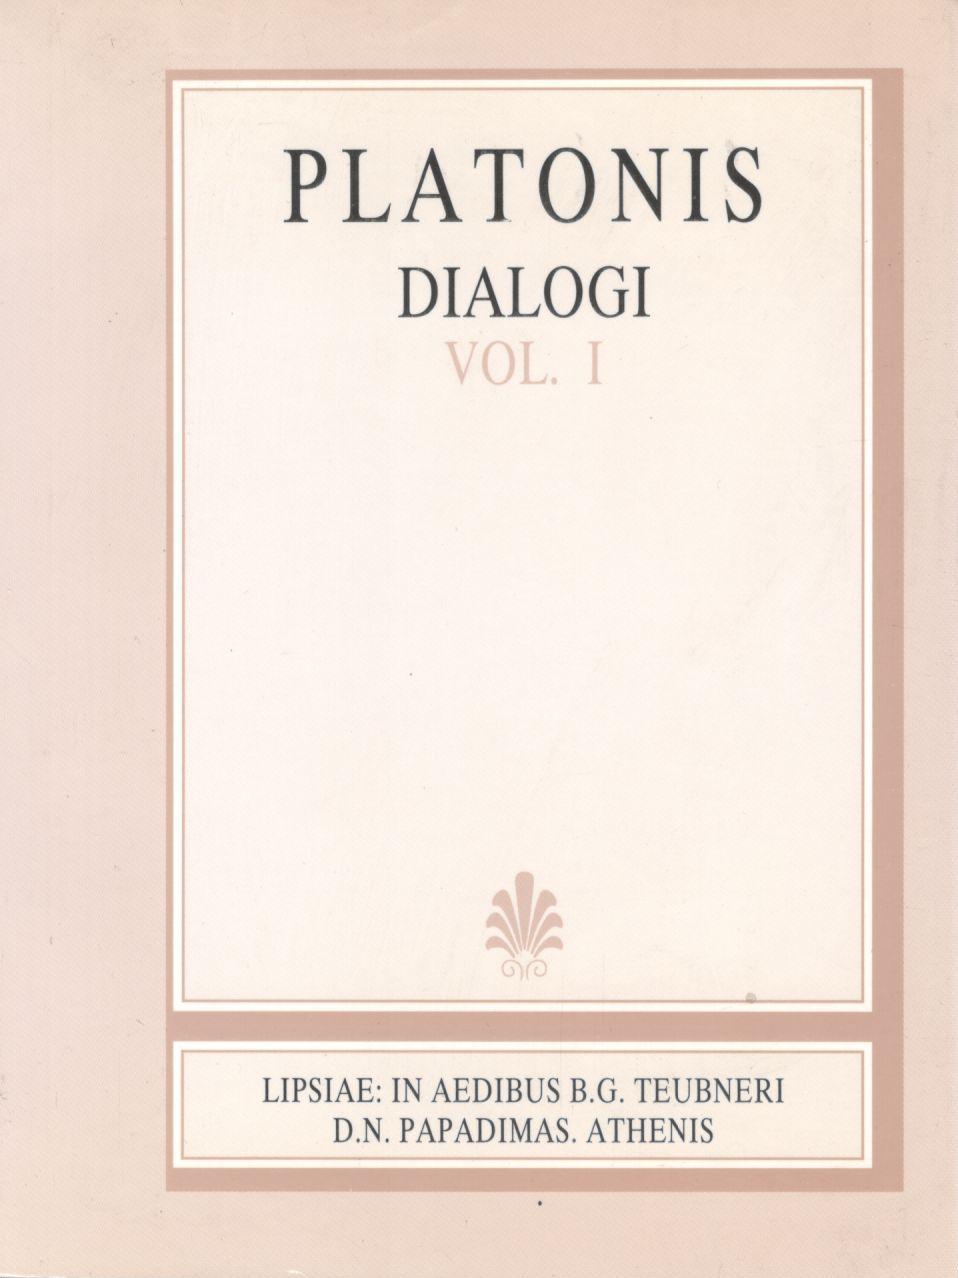 Platonis, Dialogi, Vol. I, [Πλάτωνος, Διάλογοι, τ. Α